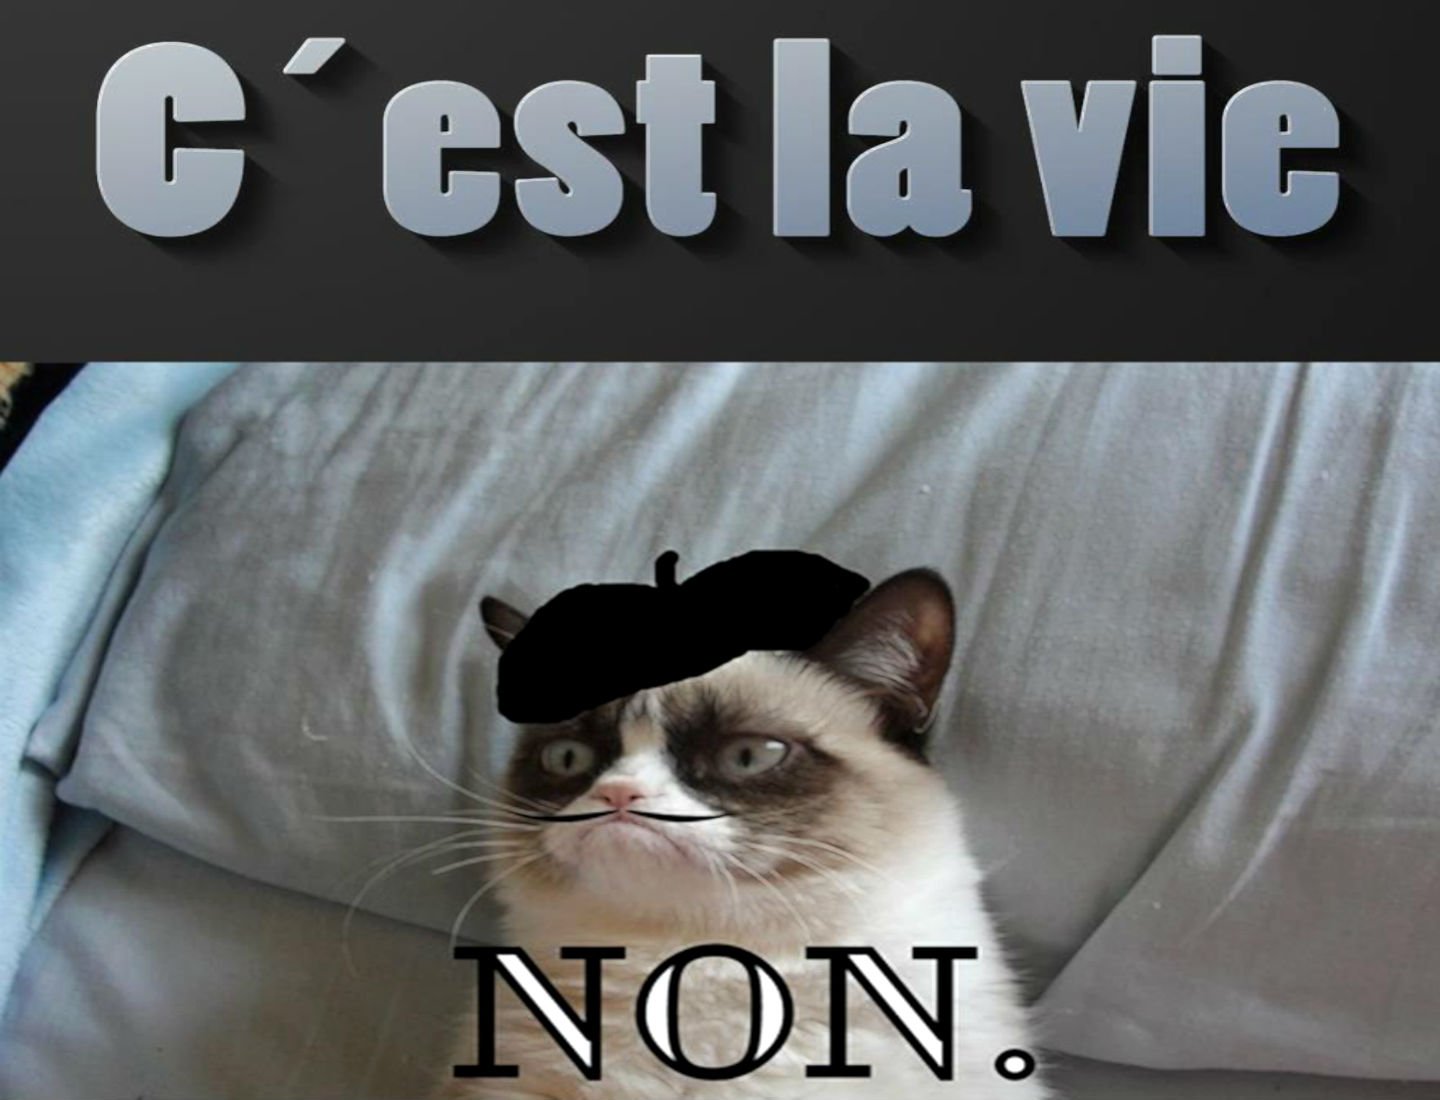 cat meme quote funny humor grumpy french sadic wallpaper background